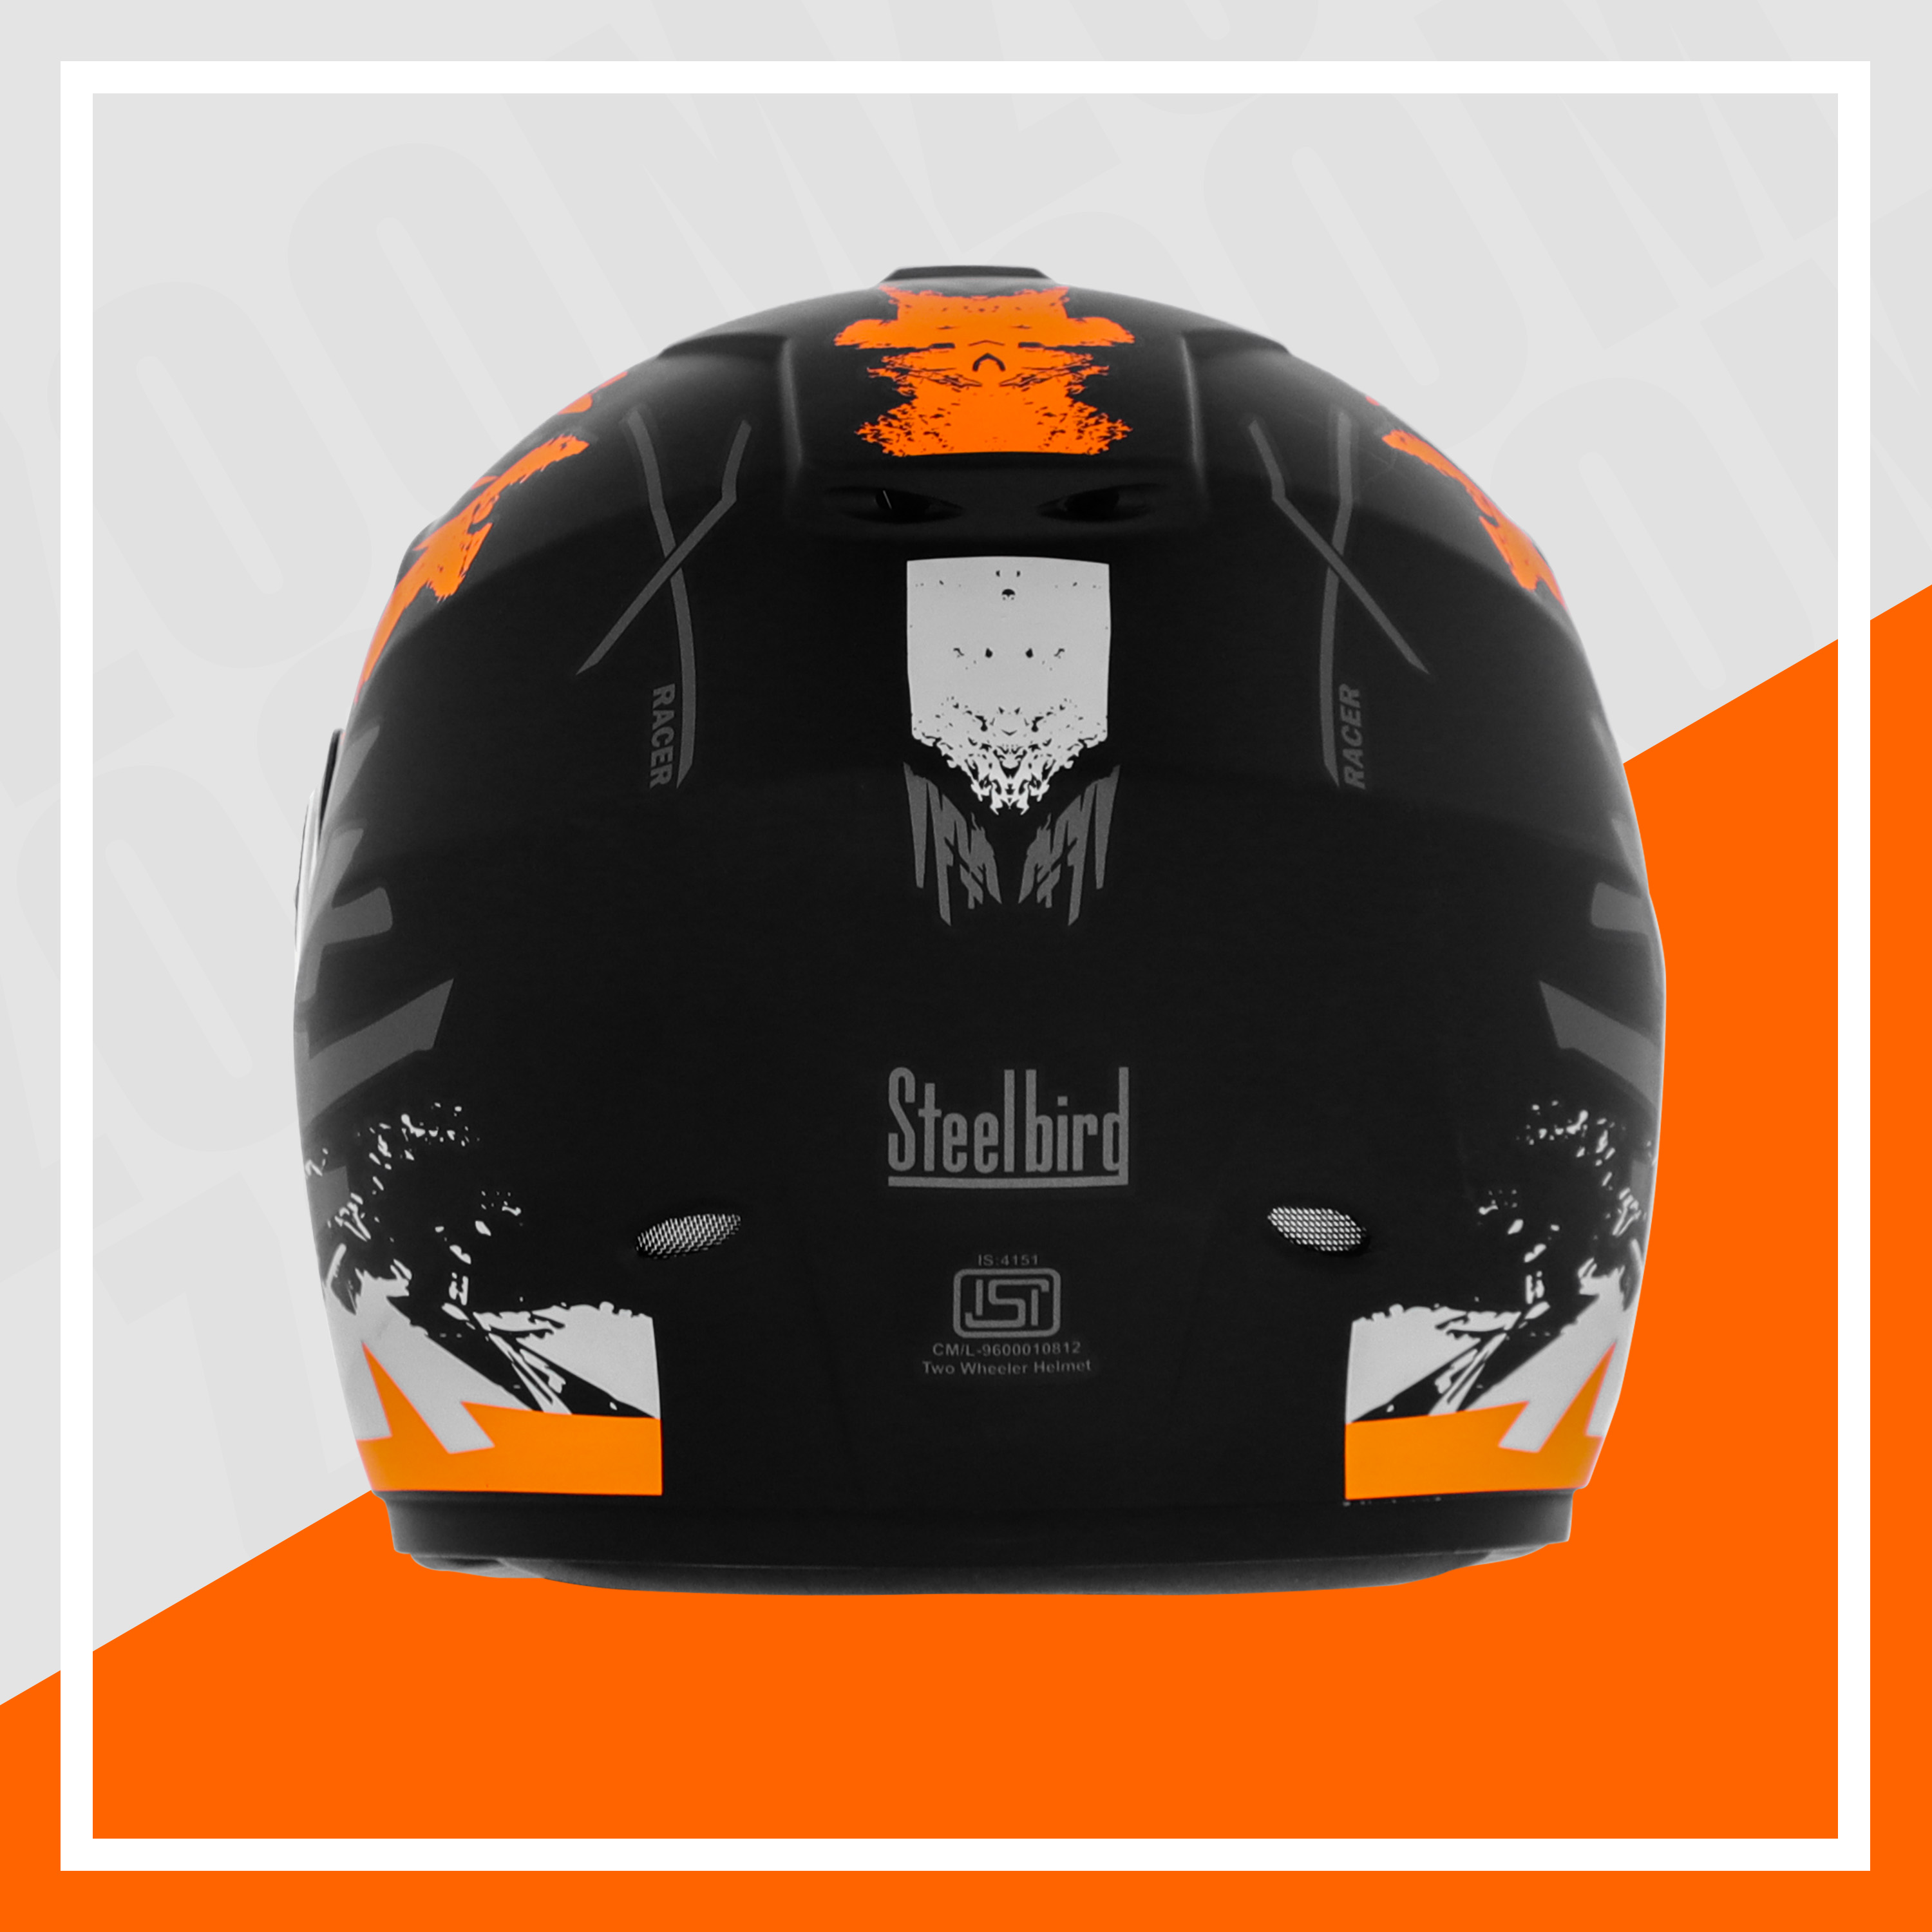 Steelbird SBH-11 Zoom Racer ISI Certified Full Face Graphic Helmet For Men And Women (Glossy Black Orange With Chrome Rainbow Visor)